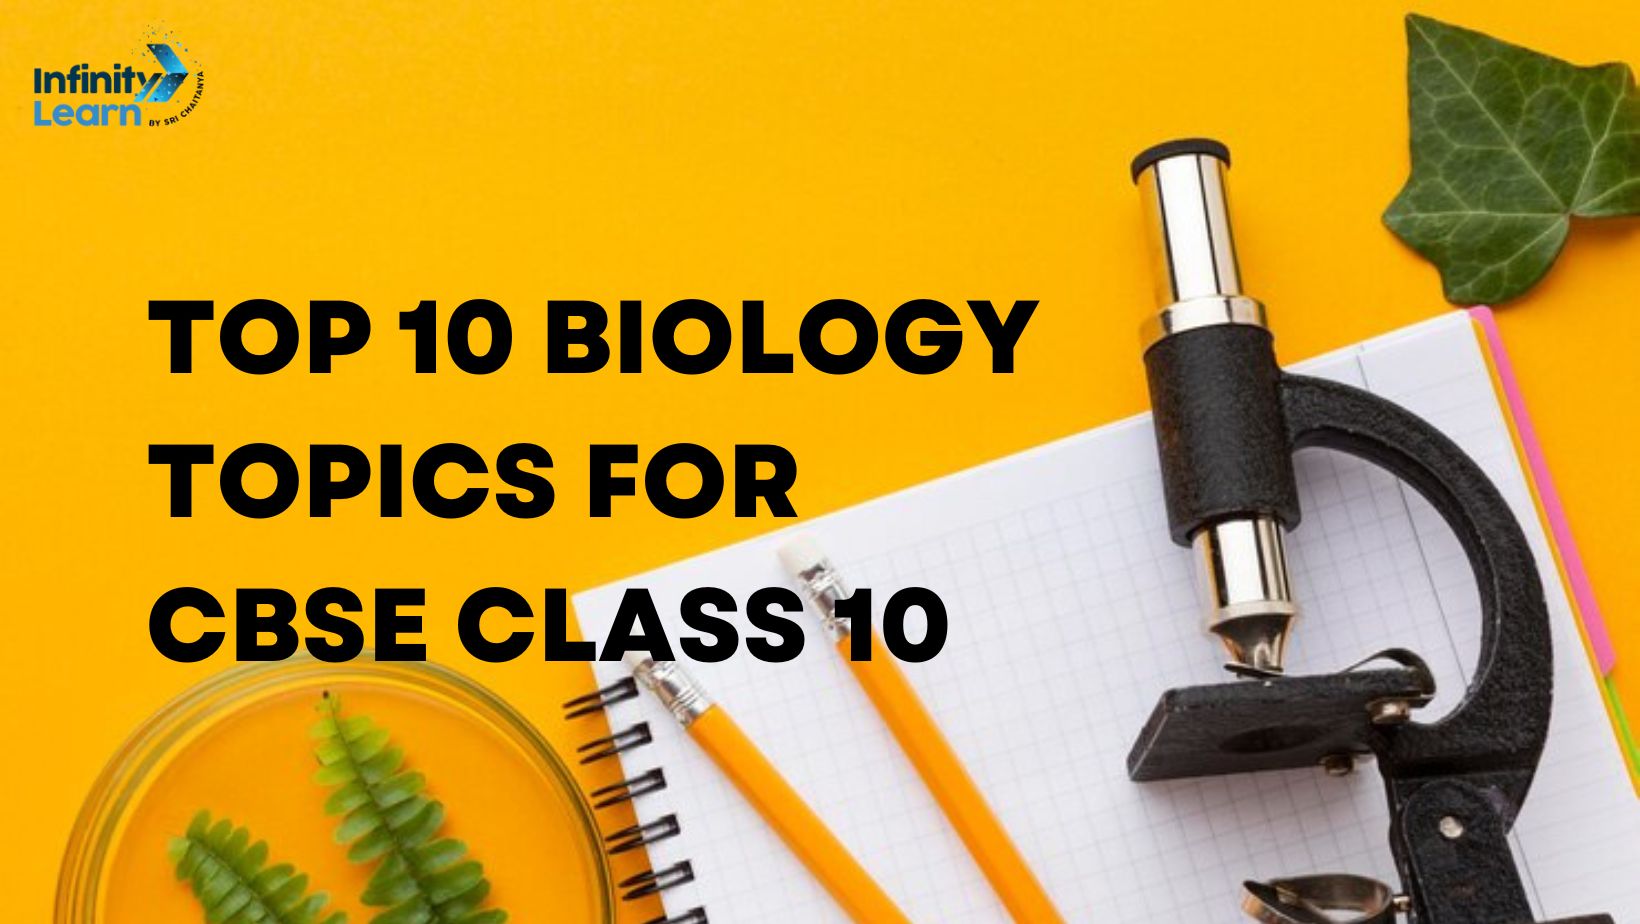 Top 10 Biology Topics for CBSE Class 10